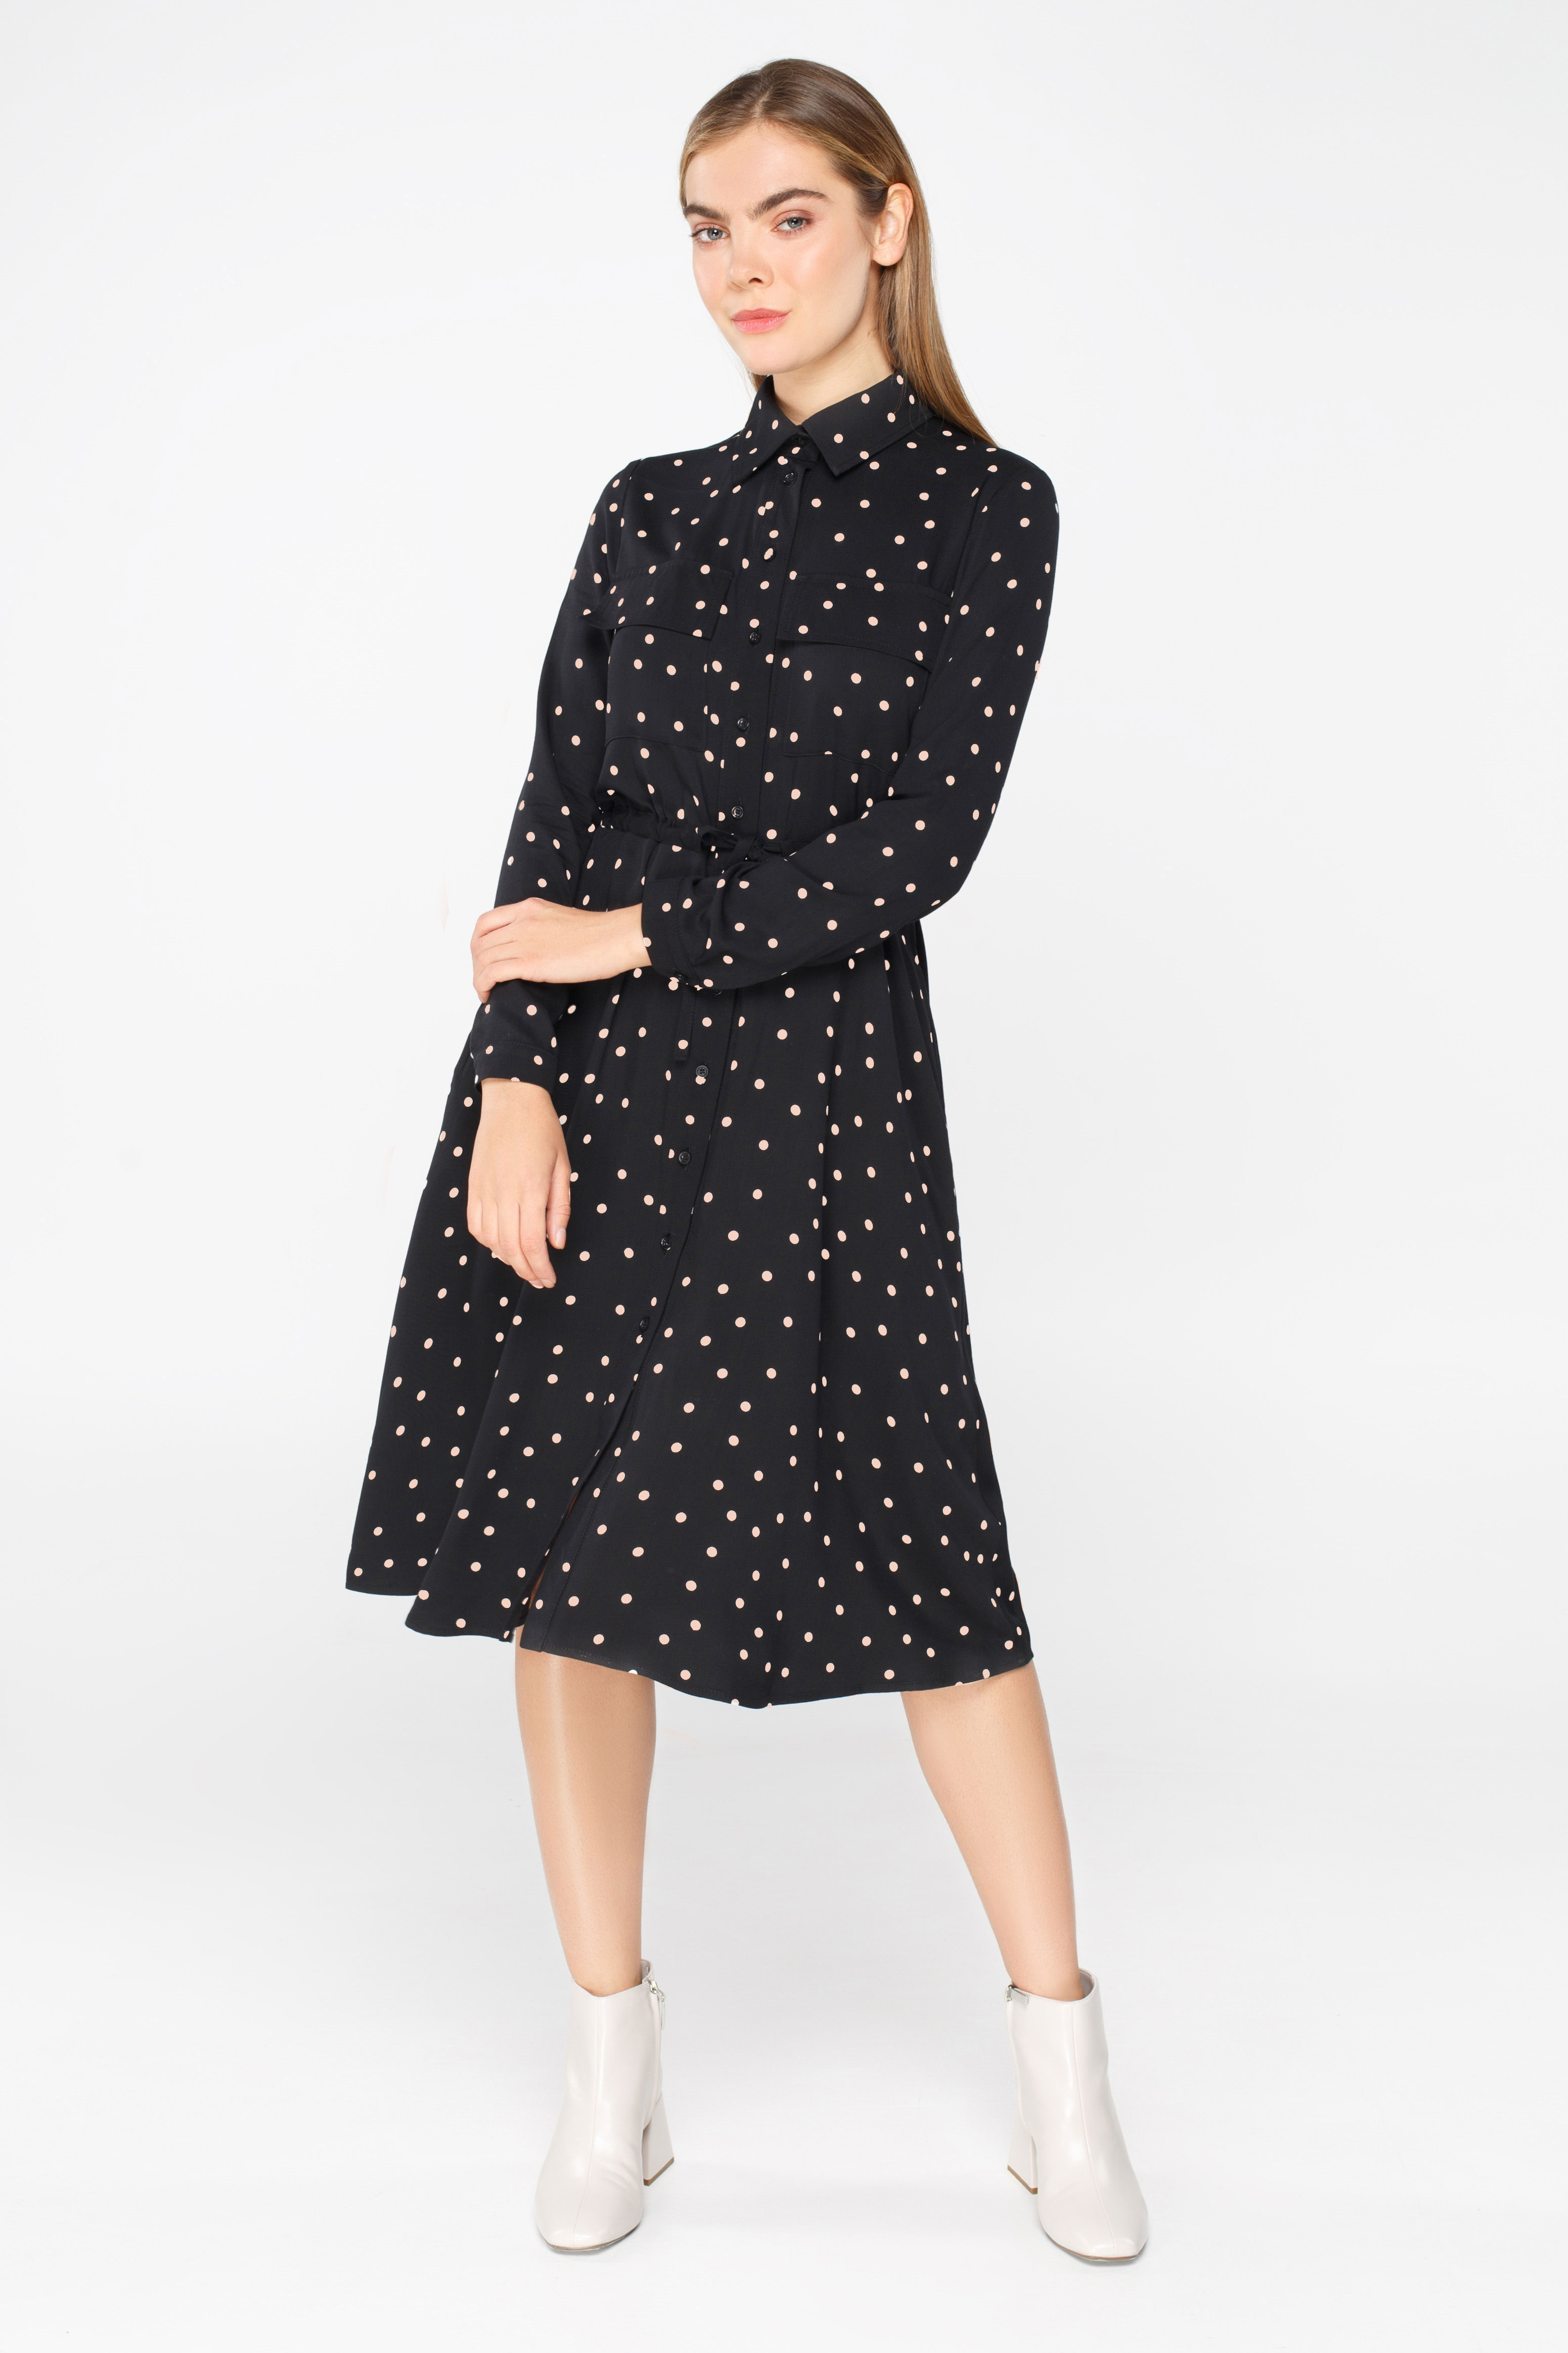 Black polka dot shirt dress below the knee, photo 2